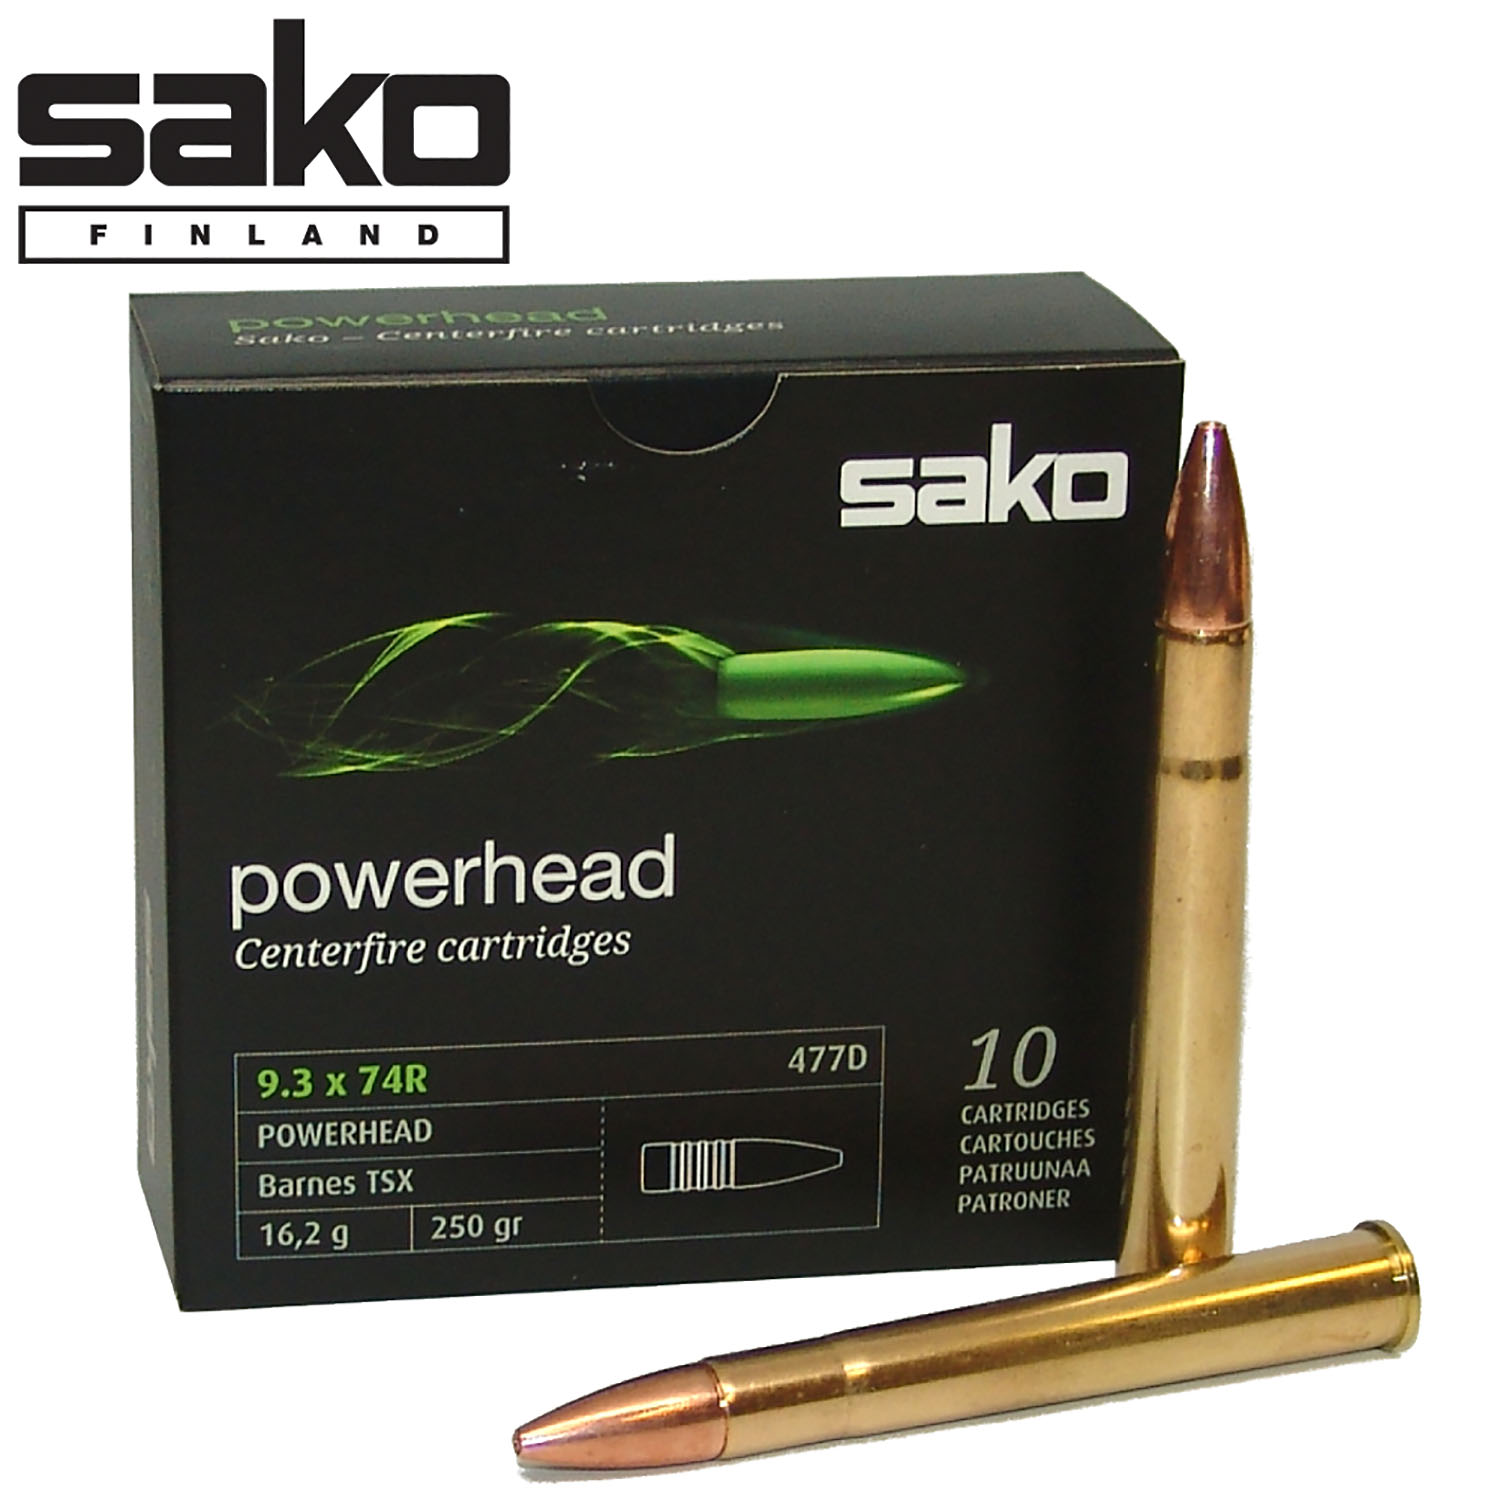 Sako 9.3x74R Powerhead 16,2g/250gr